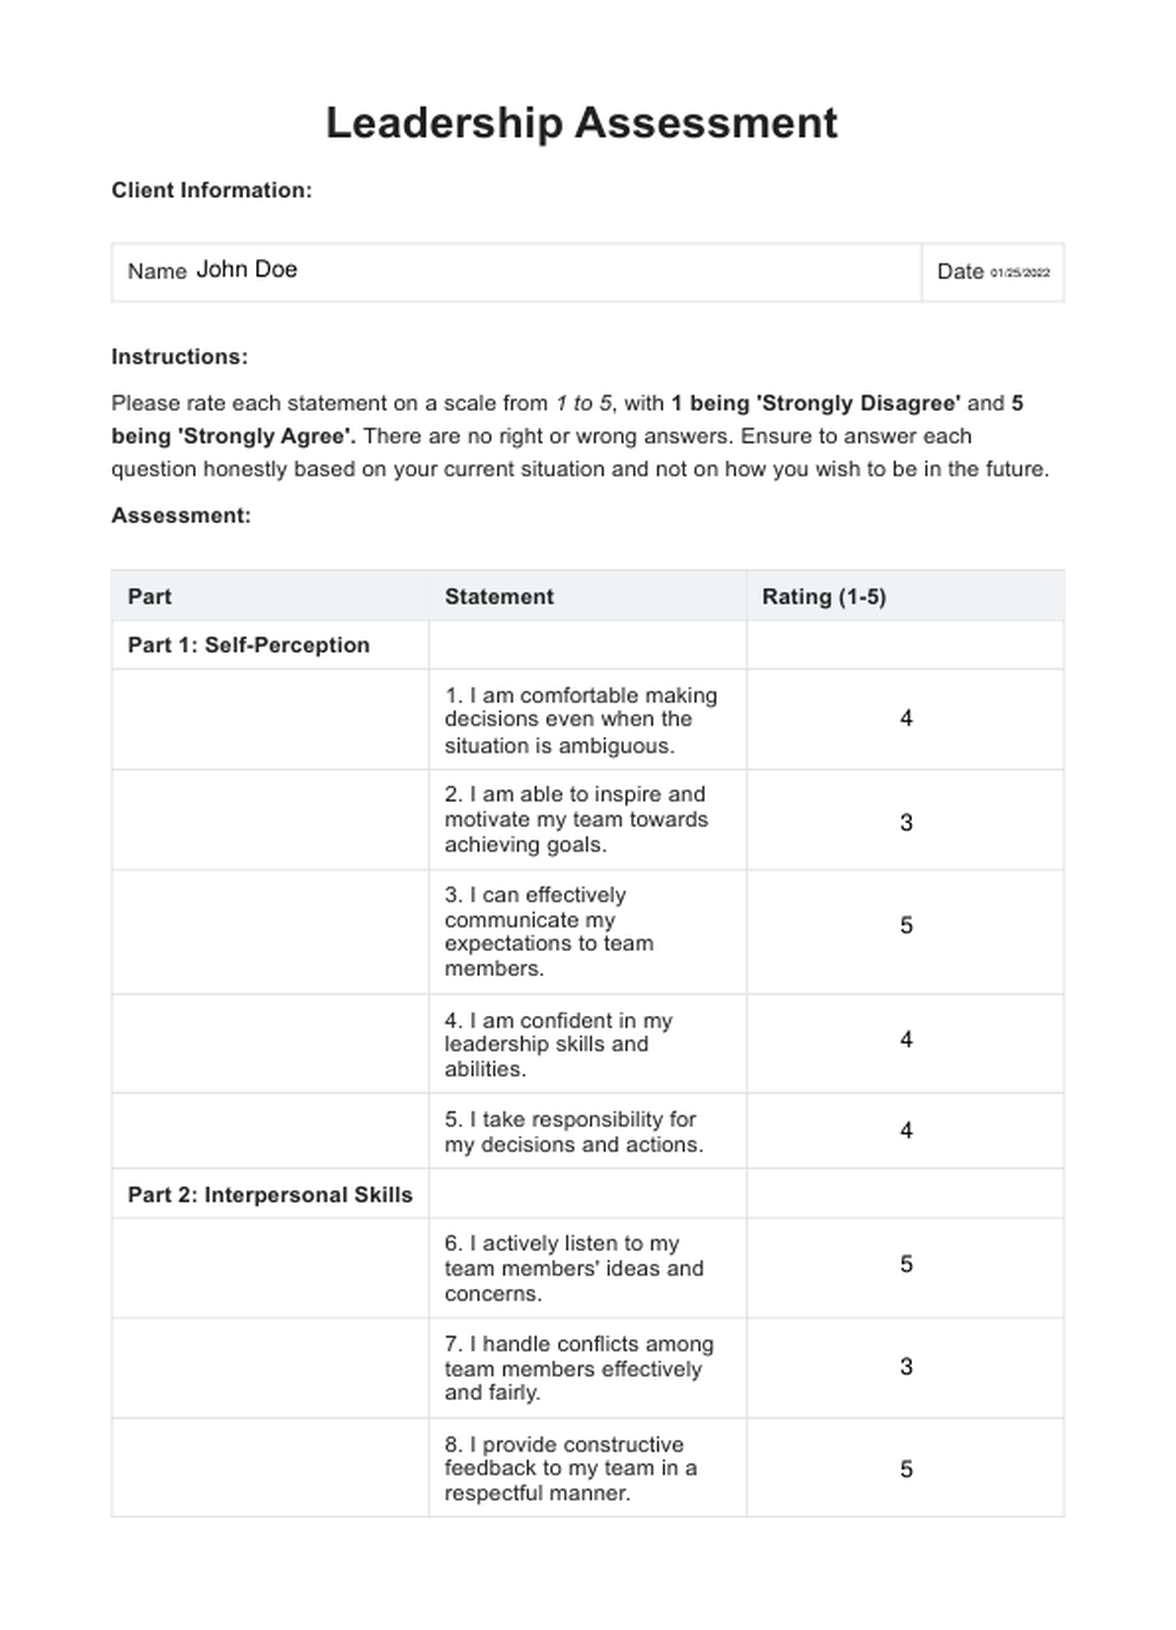 Leadership Assessment PDF Example